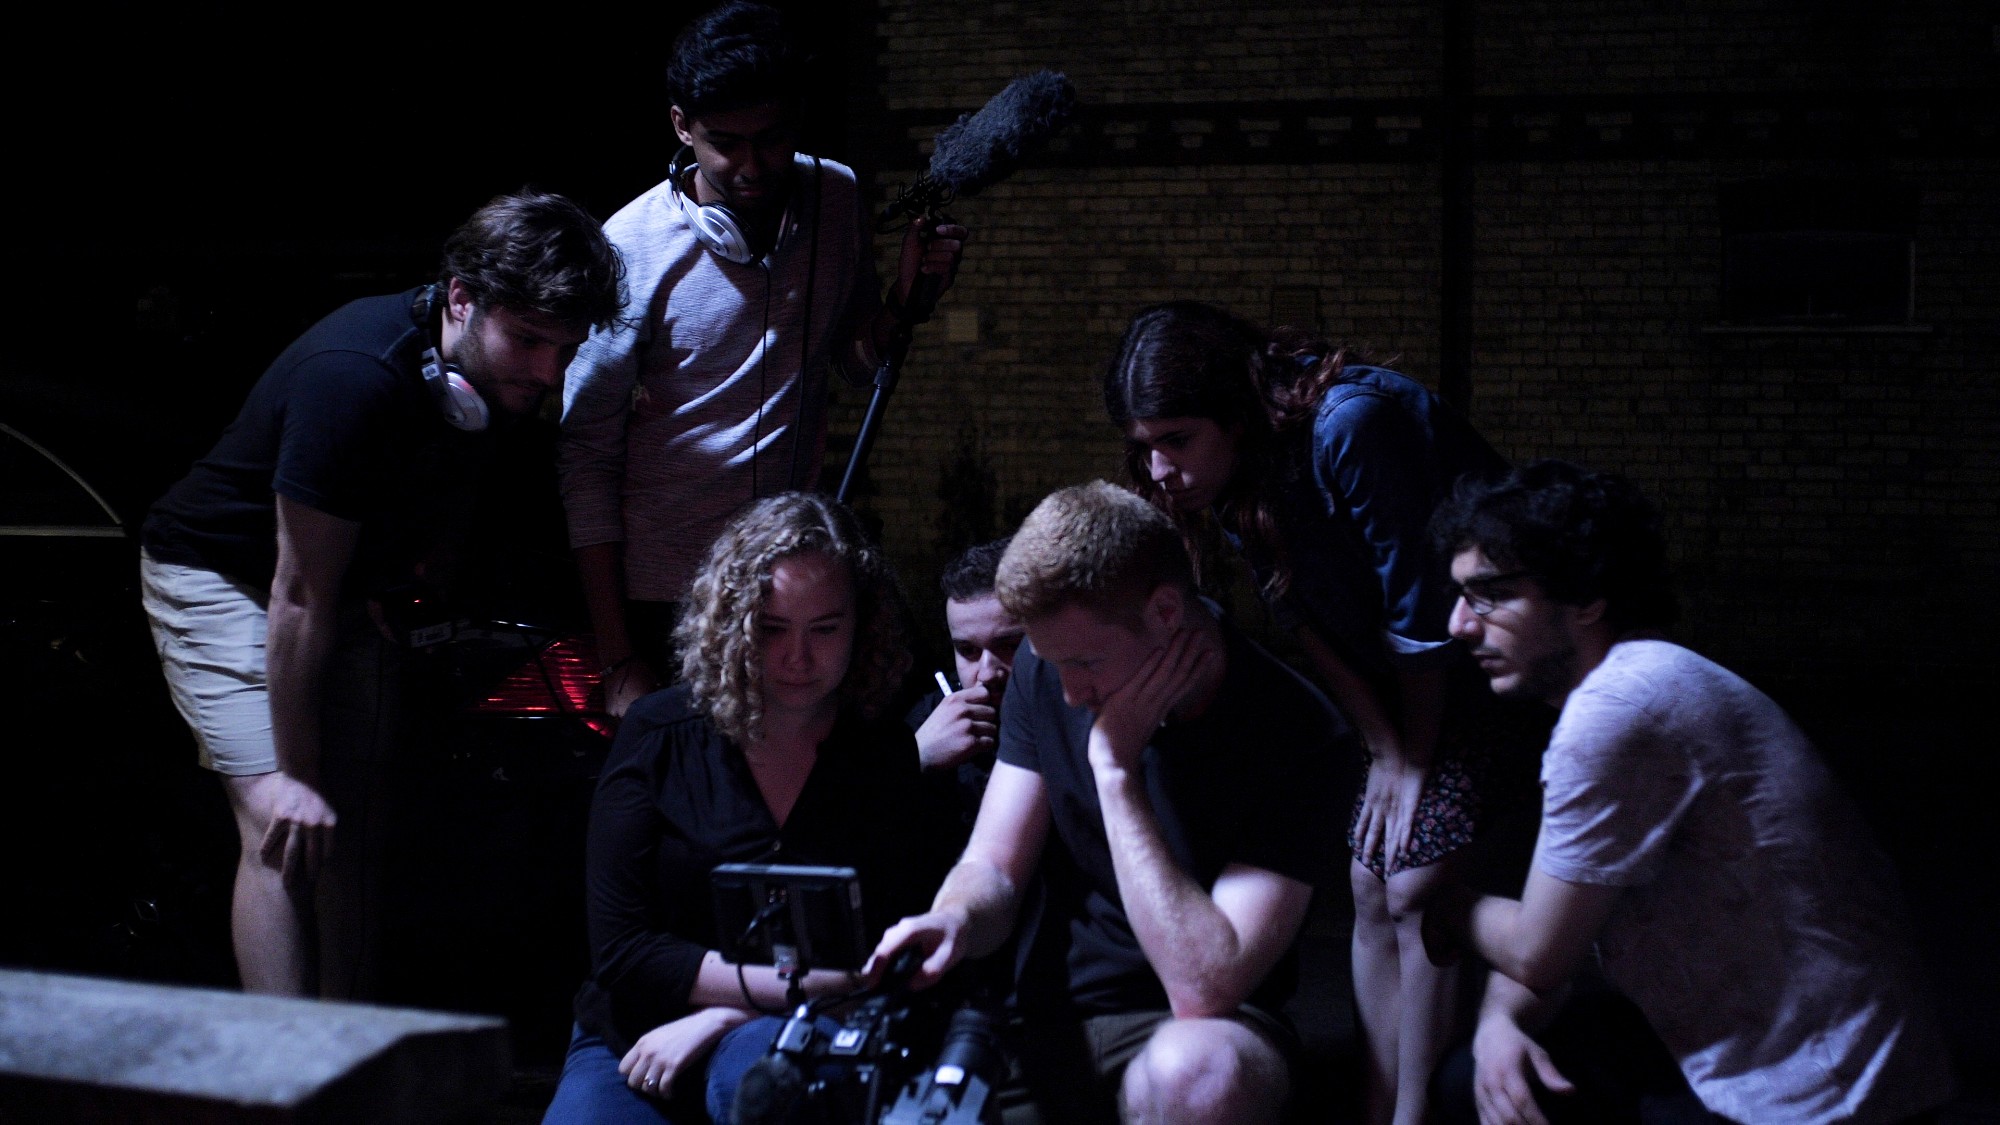 Weronika Tomaszewska, Max Elgar, Francesco Merlini-Fiore, Joana Fonseca and the rest of the crew of 'Relapse' looking at the last take of the film.